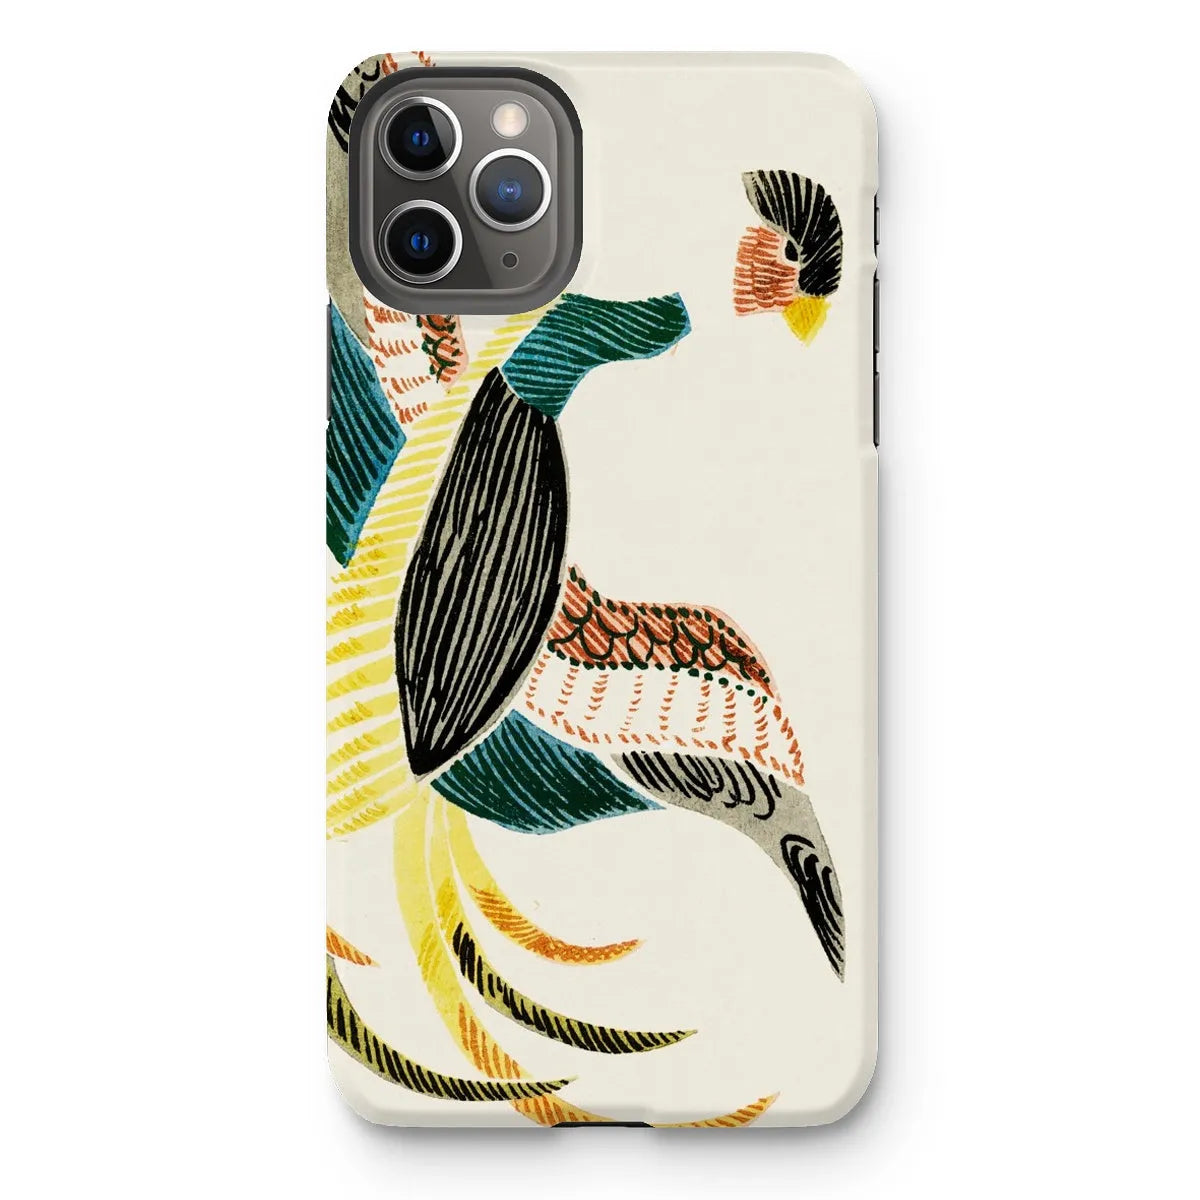 Woodblock Crane - Japanese Bird Phone Case - Taguchi Tomoki - Iphone 11 Pro Max / Matte - Mobile Phone Cases